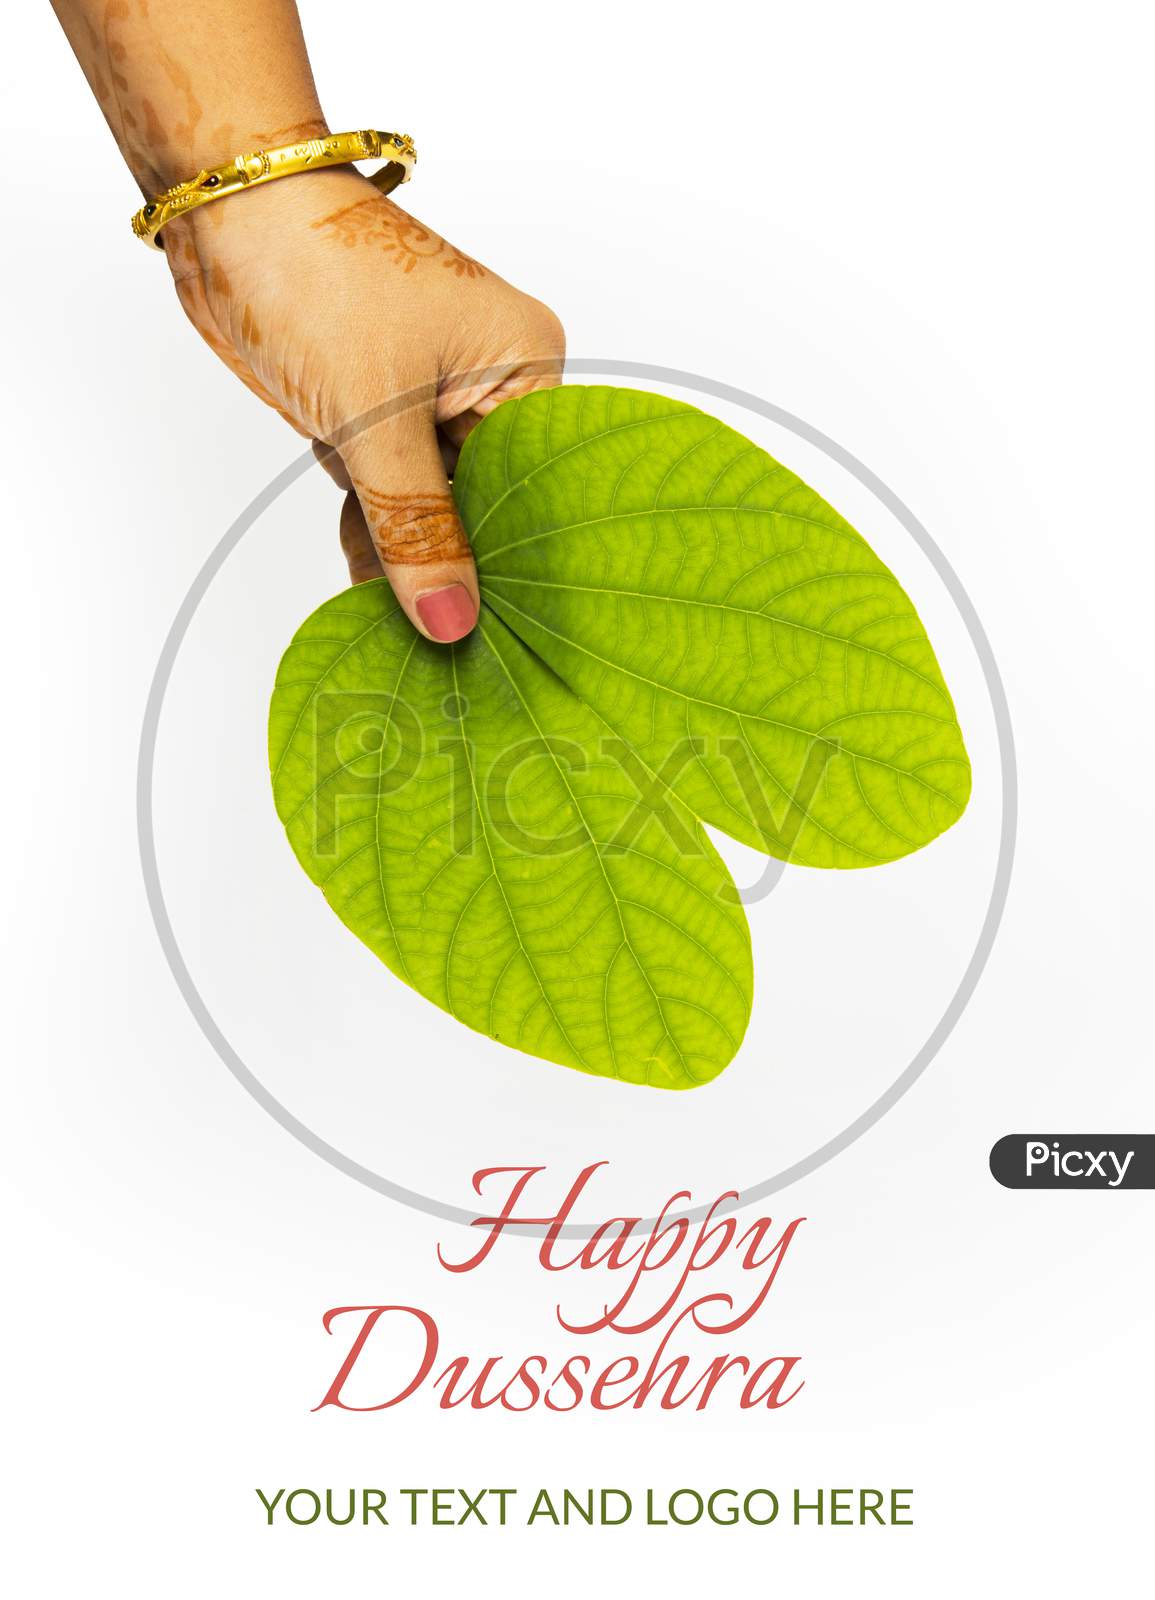 Happy Dussehra greeting card using apta  / Bauhinia racemosa / Bidi leaf